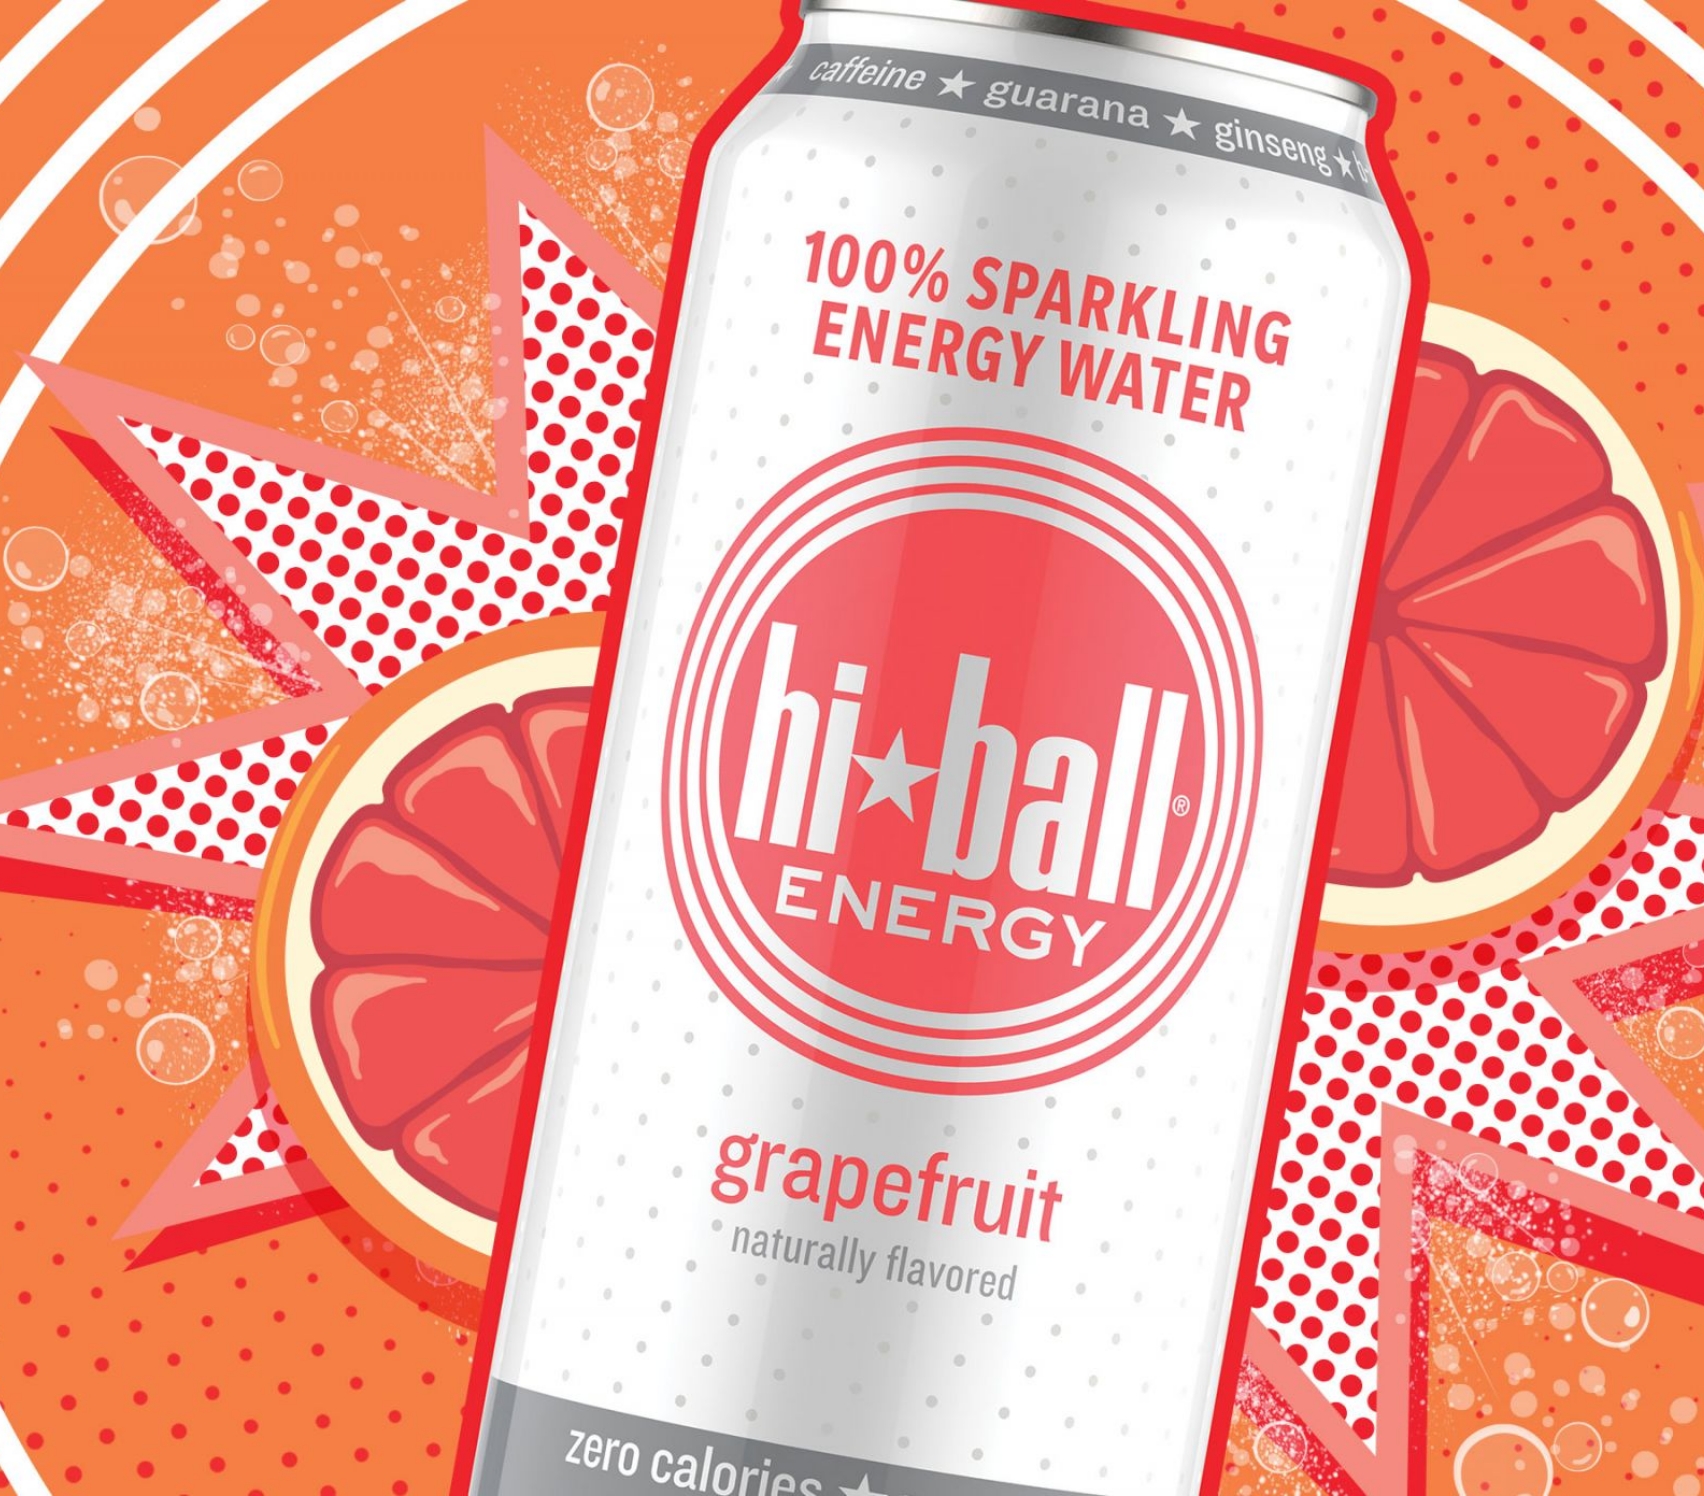 HI-Ball Energy Drink